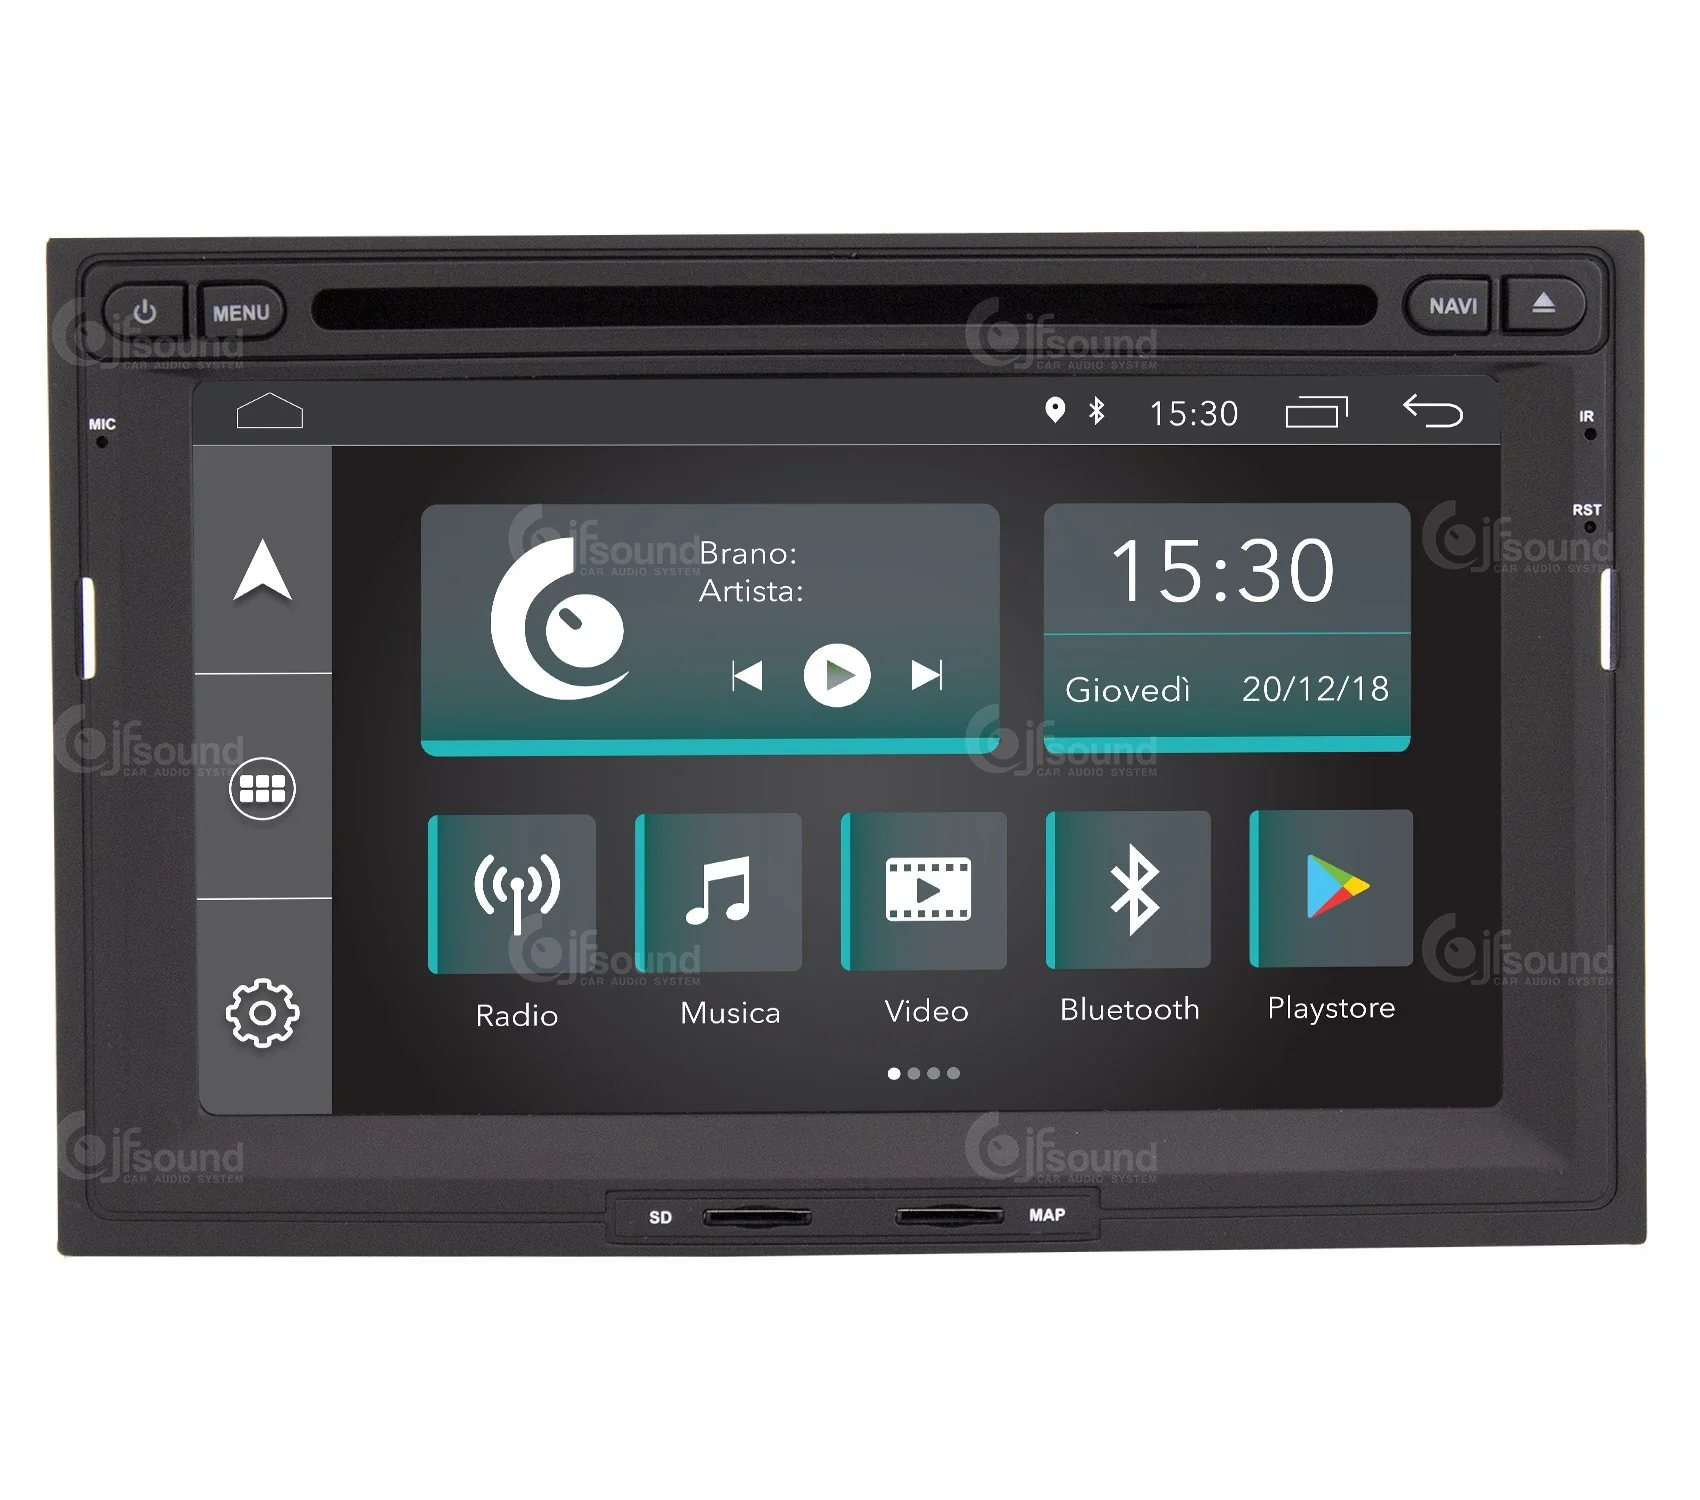 medaljevinder svale Stjerne Custom fit car radio Peugeot 3008 5008 Android DAB Gps, Bluetooth, Wifi Usb  Full Hd touchscreen display 7” - AliExpress